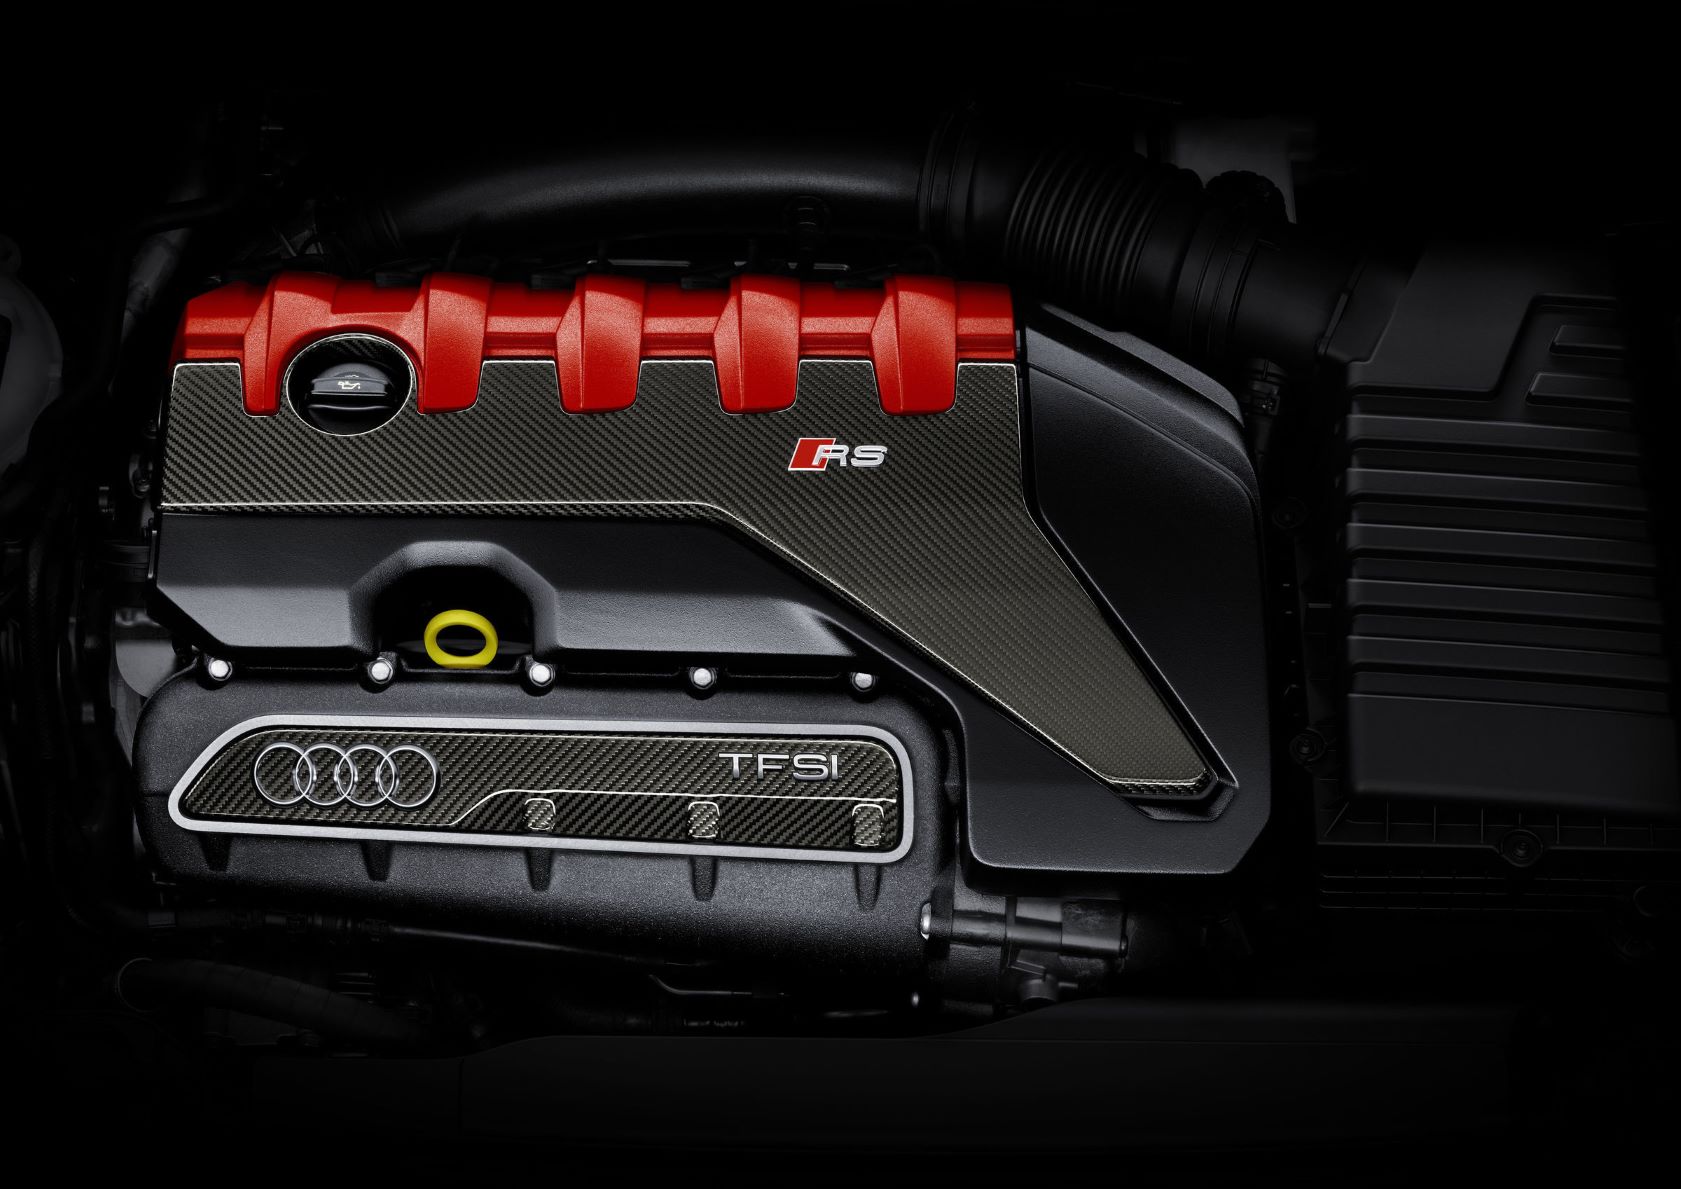 Audi's 5 cylinder engine